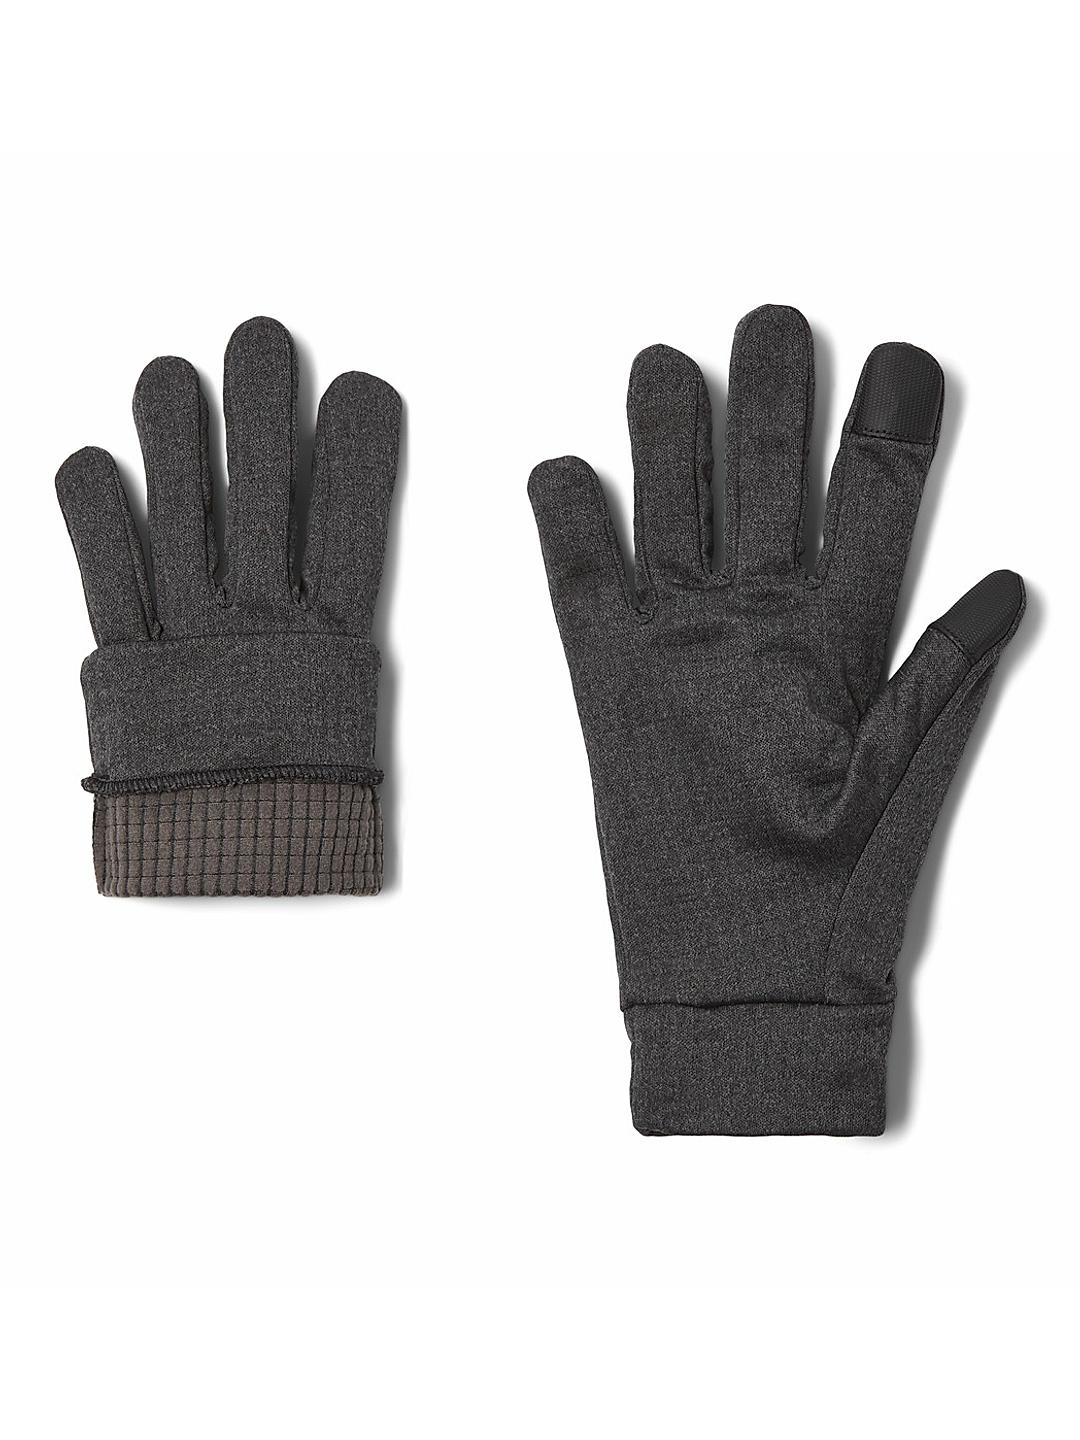 Buy Black Bugaboo Interchange Gloves for Men Online at Columbia ...